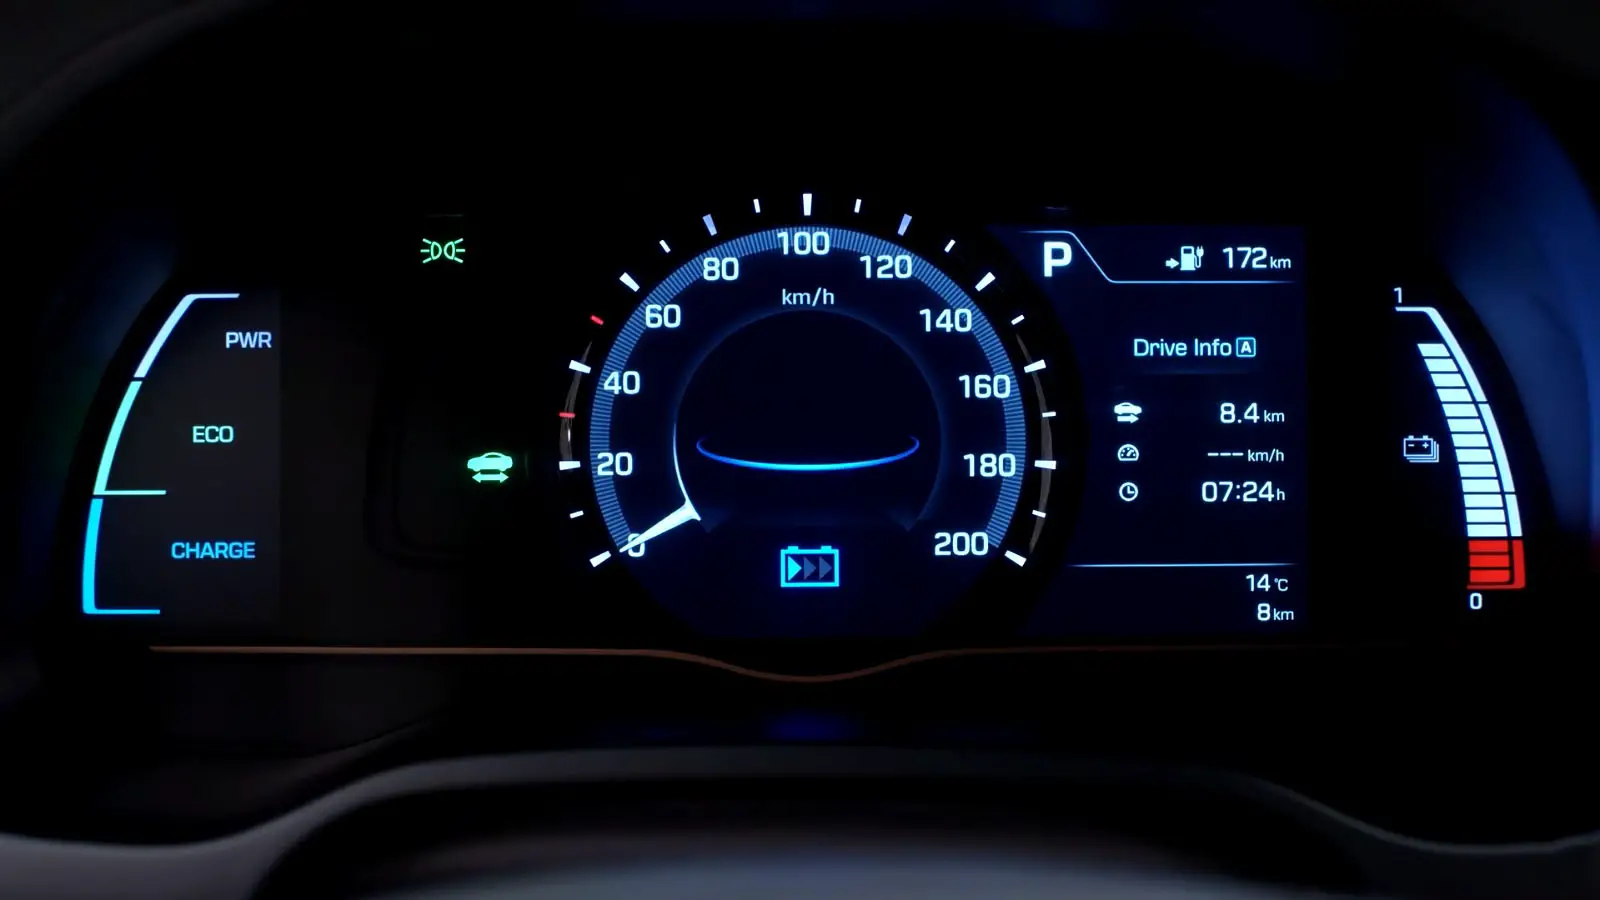 Hyundai Ioniq Electric Hybrid interior view